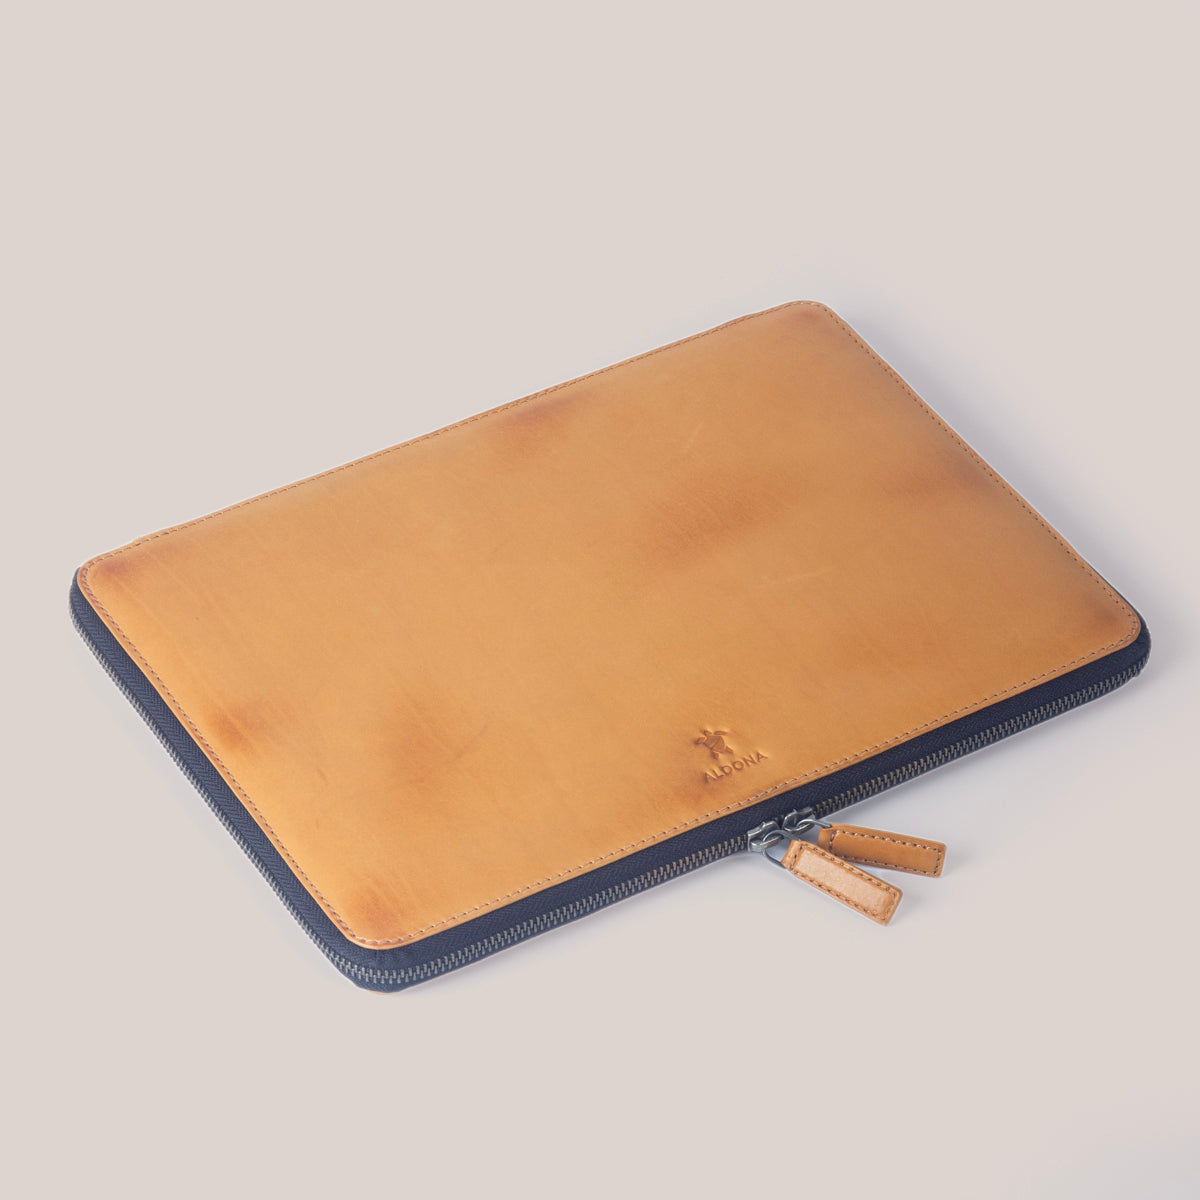 MacBook Pro 13 Zippered Laptop Case - Vintage Tan